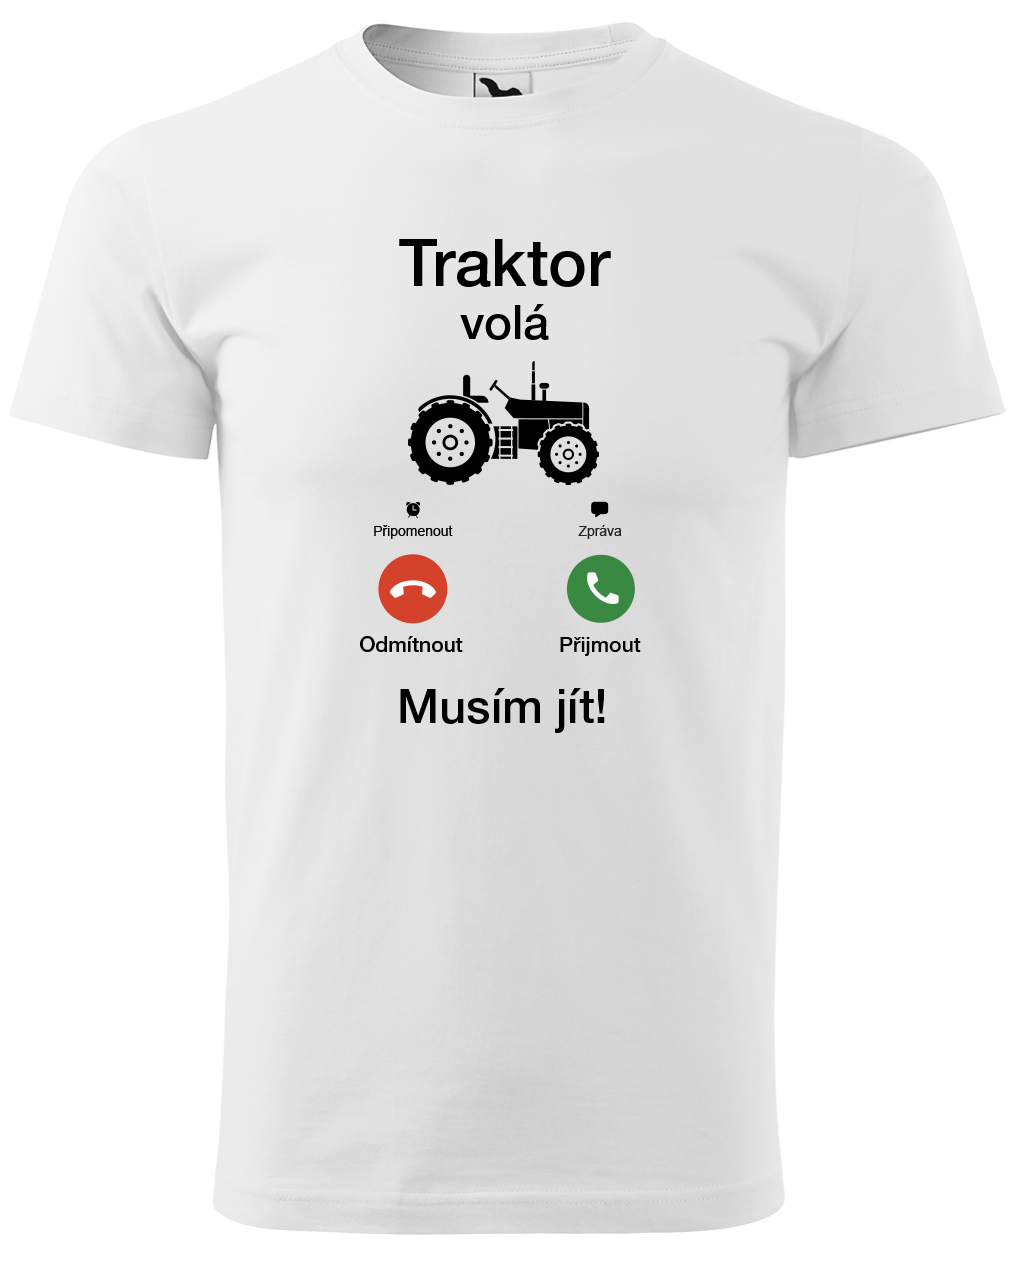 Tričko s traktorem - Traktor volá Velikost: S, Barva: Bílá (00)